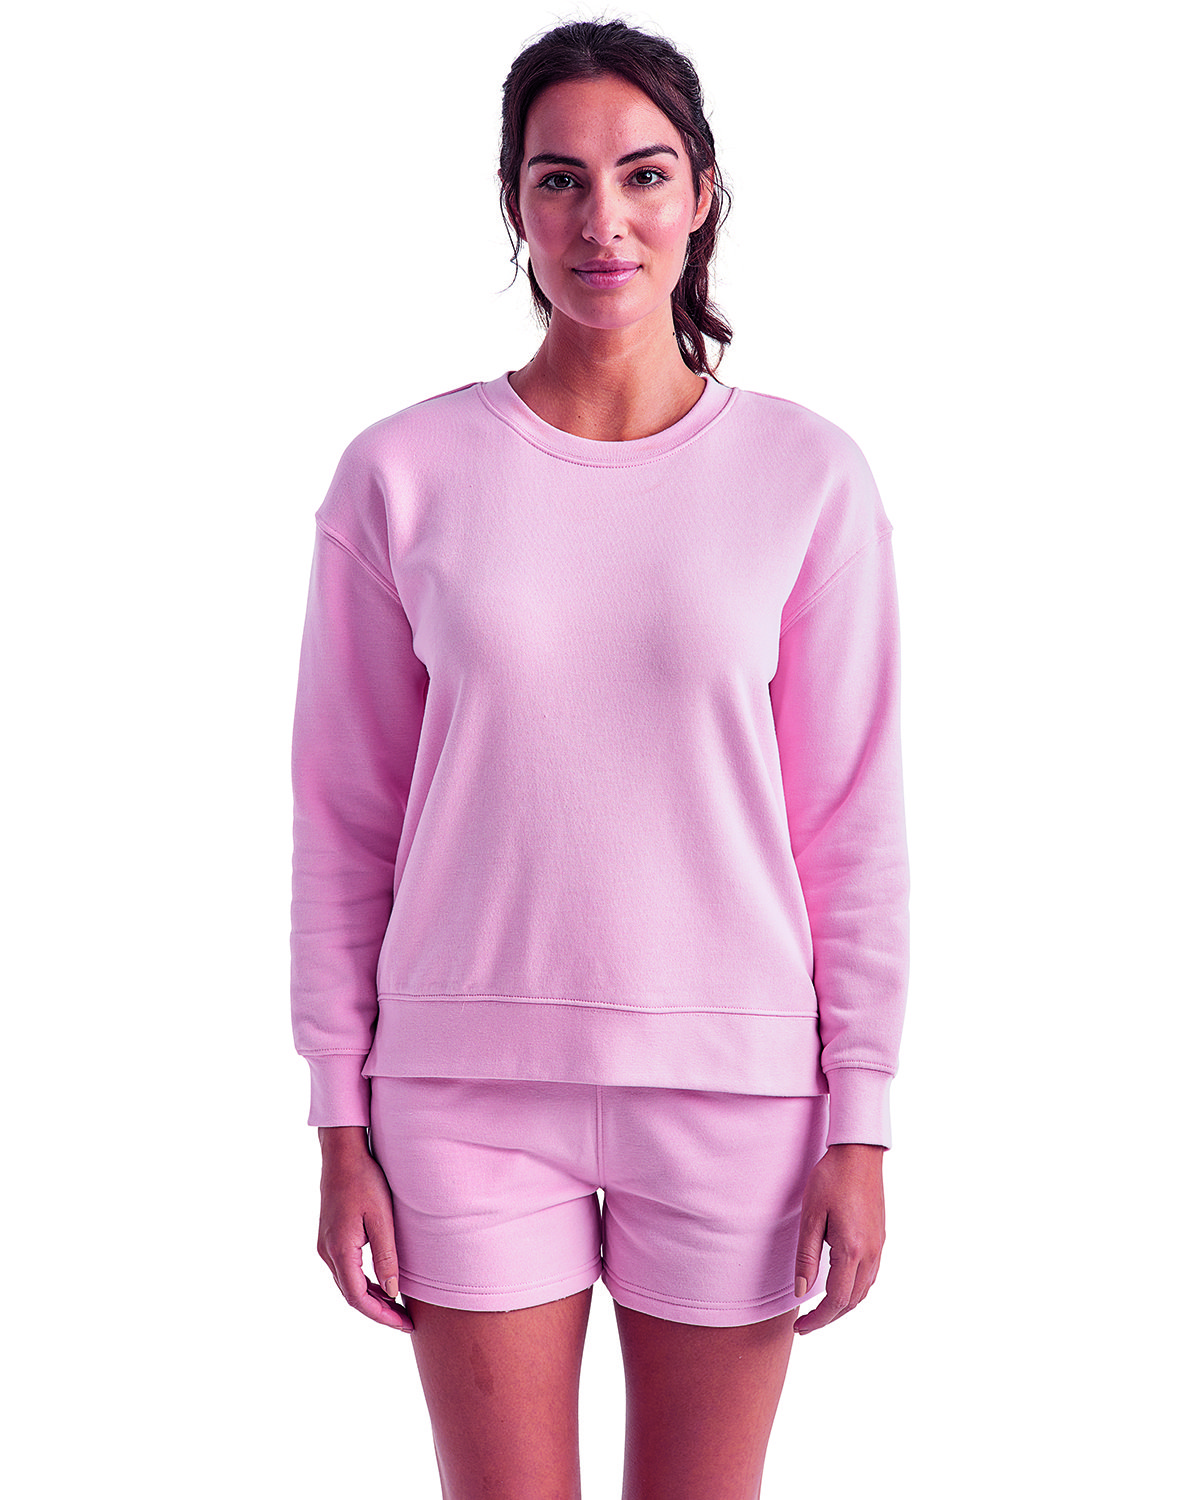 TriDri Ladies' Billie Side-Zip Sweatshirt light pink 